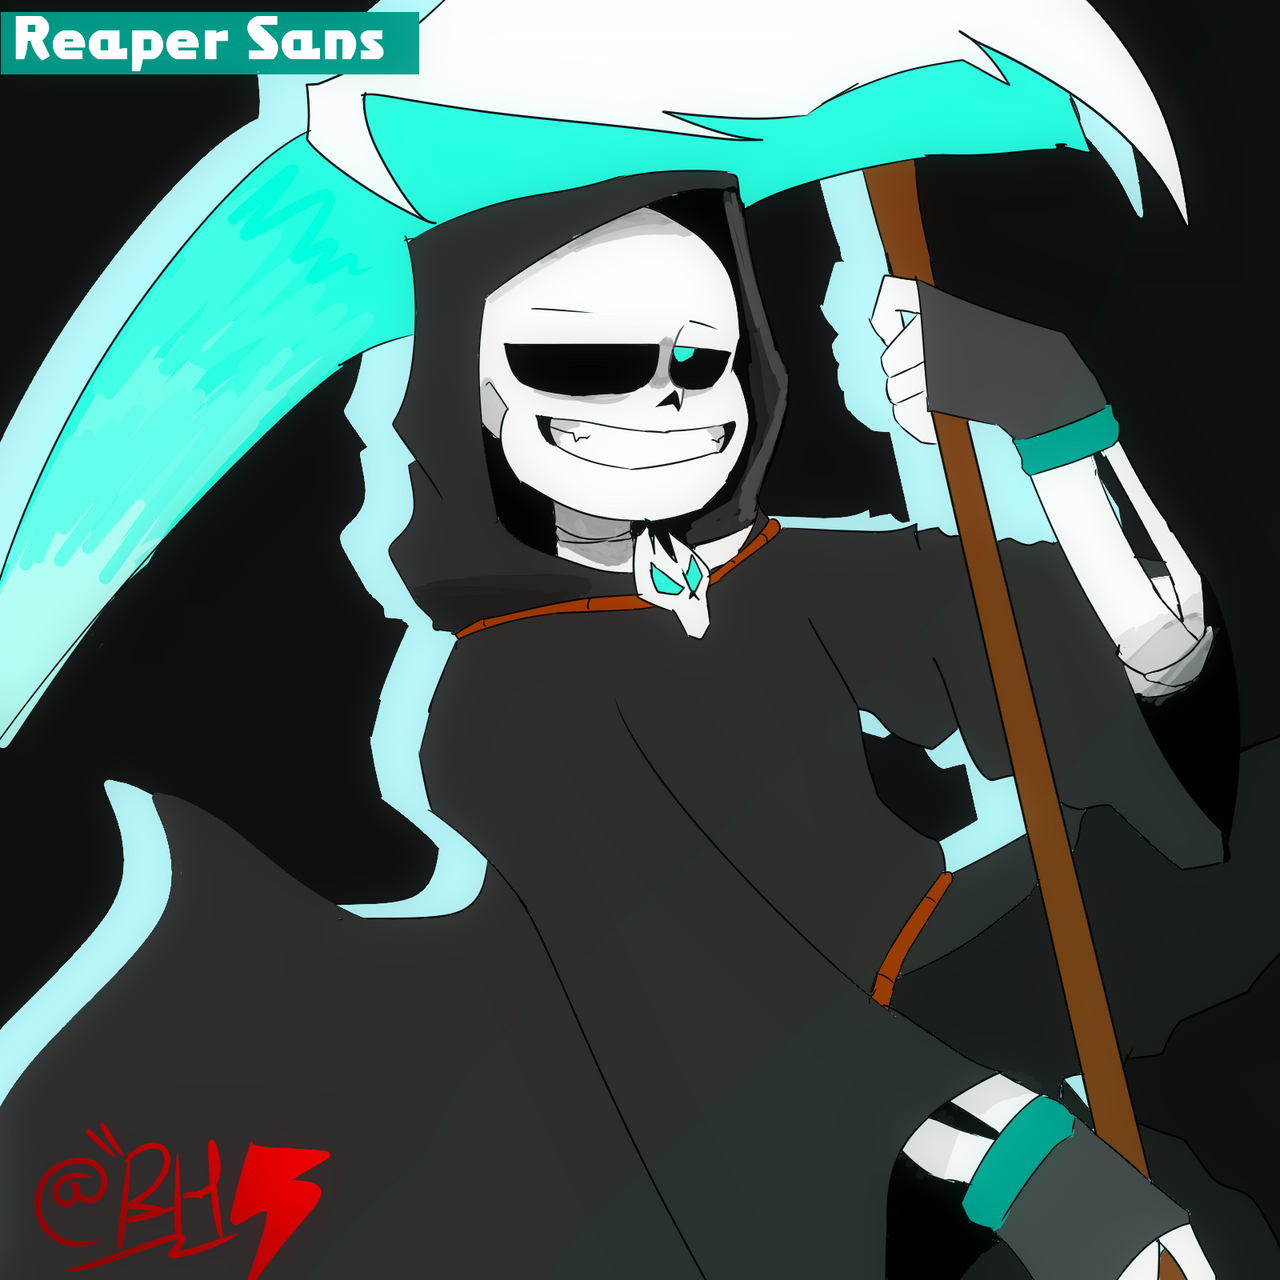 Reaper Sans - Femme Version (Undertale) by robertapw24 on DeviantArt